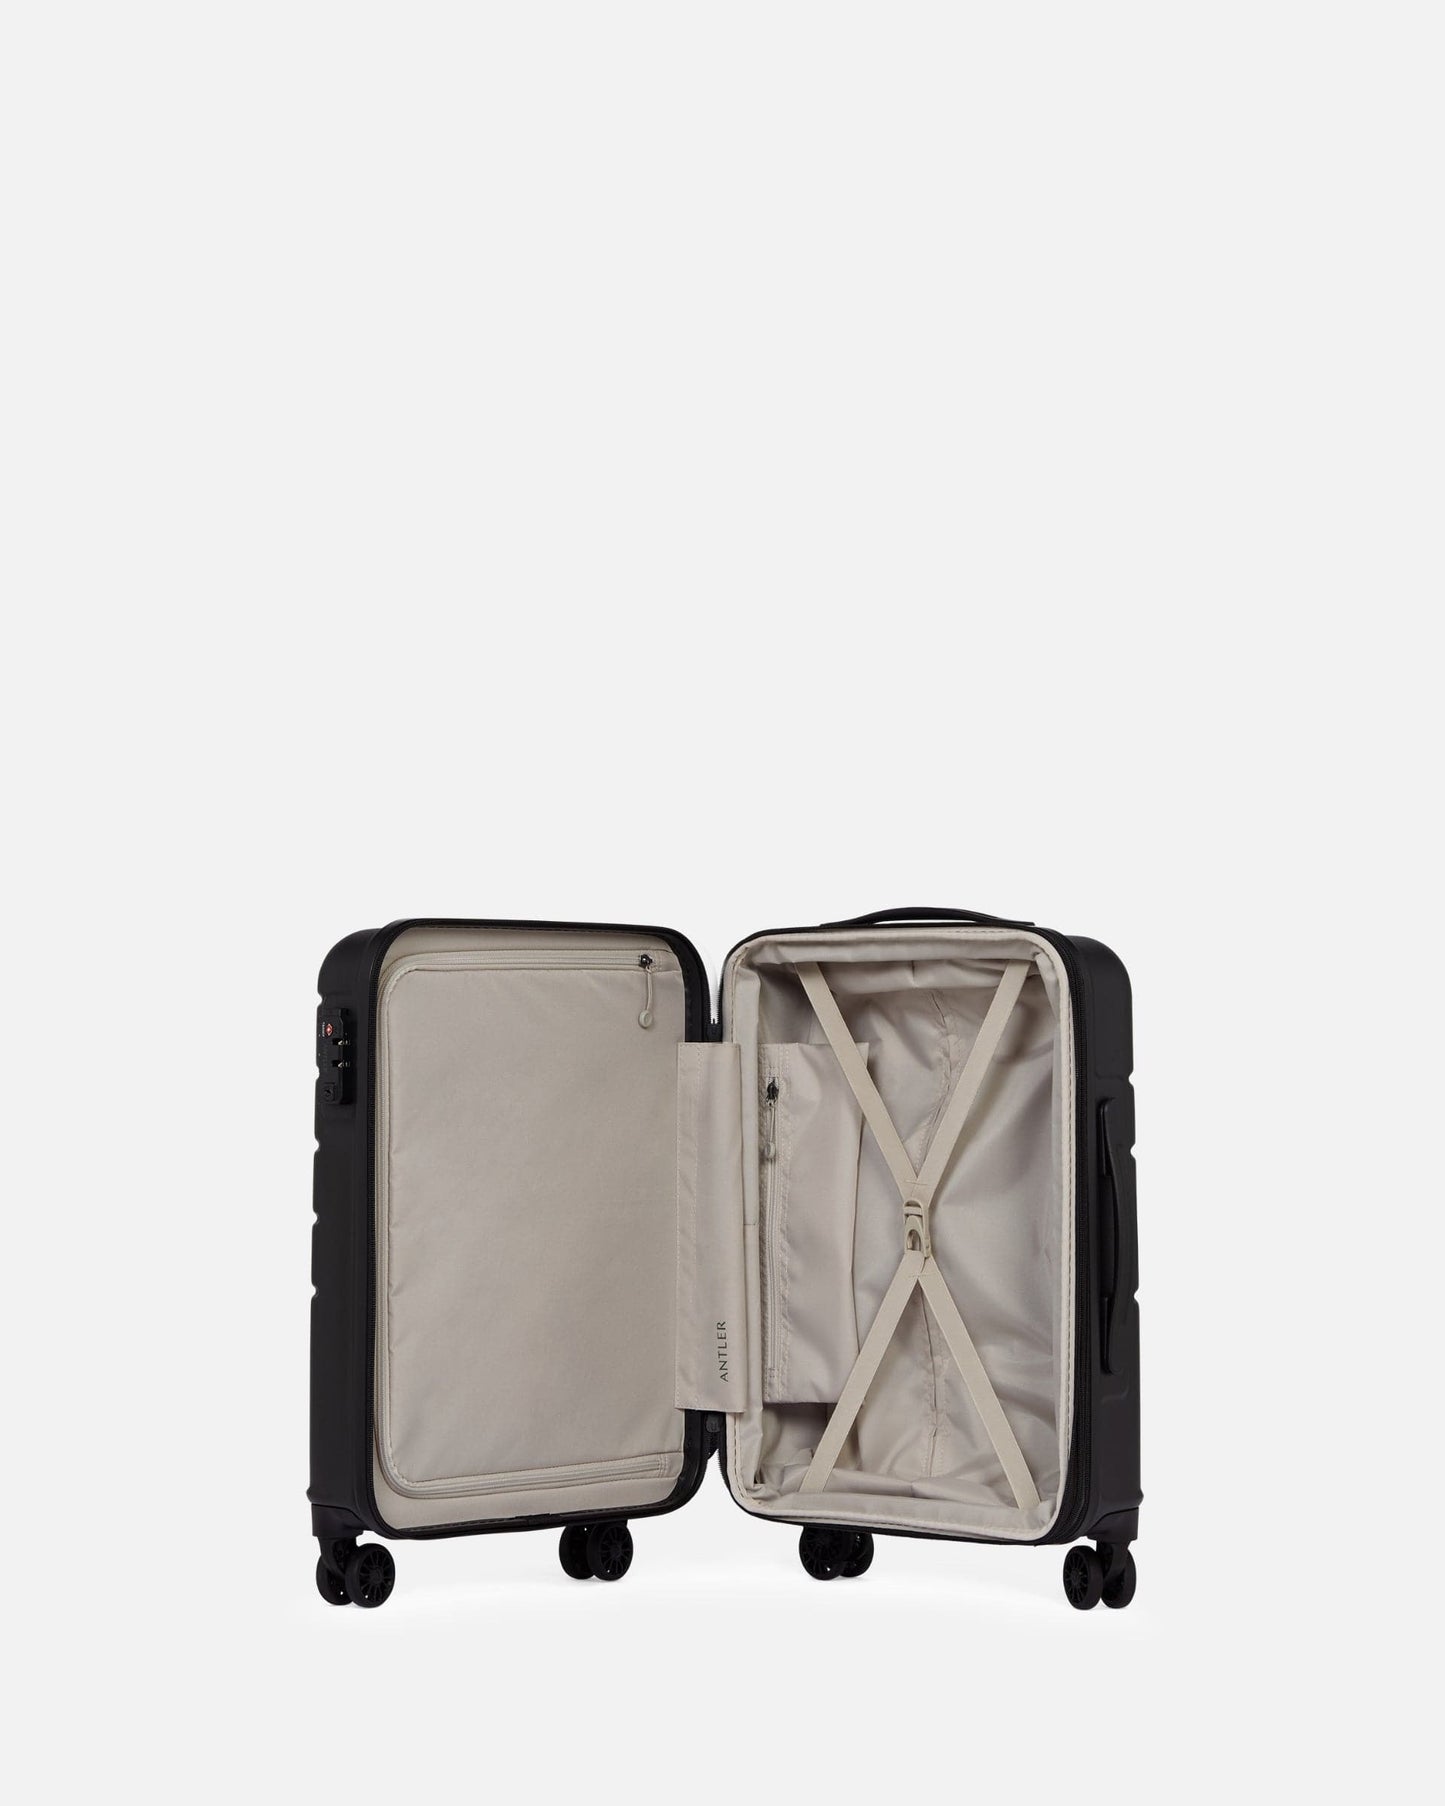 Antler UK Luggage -  Logo cabin in black - Hard Suitcases Logo Cabin Suitcase Black | Lightweight Hard Shell Luggage